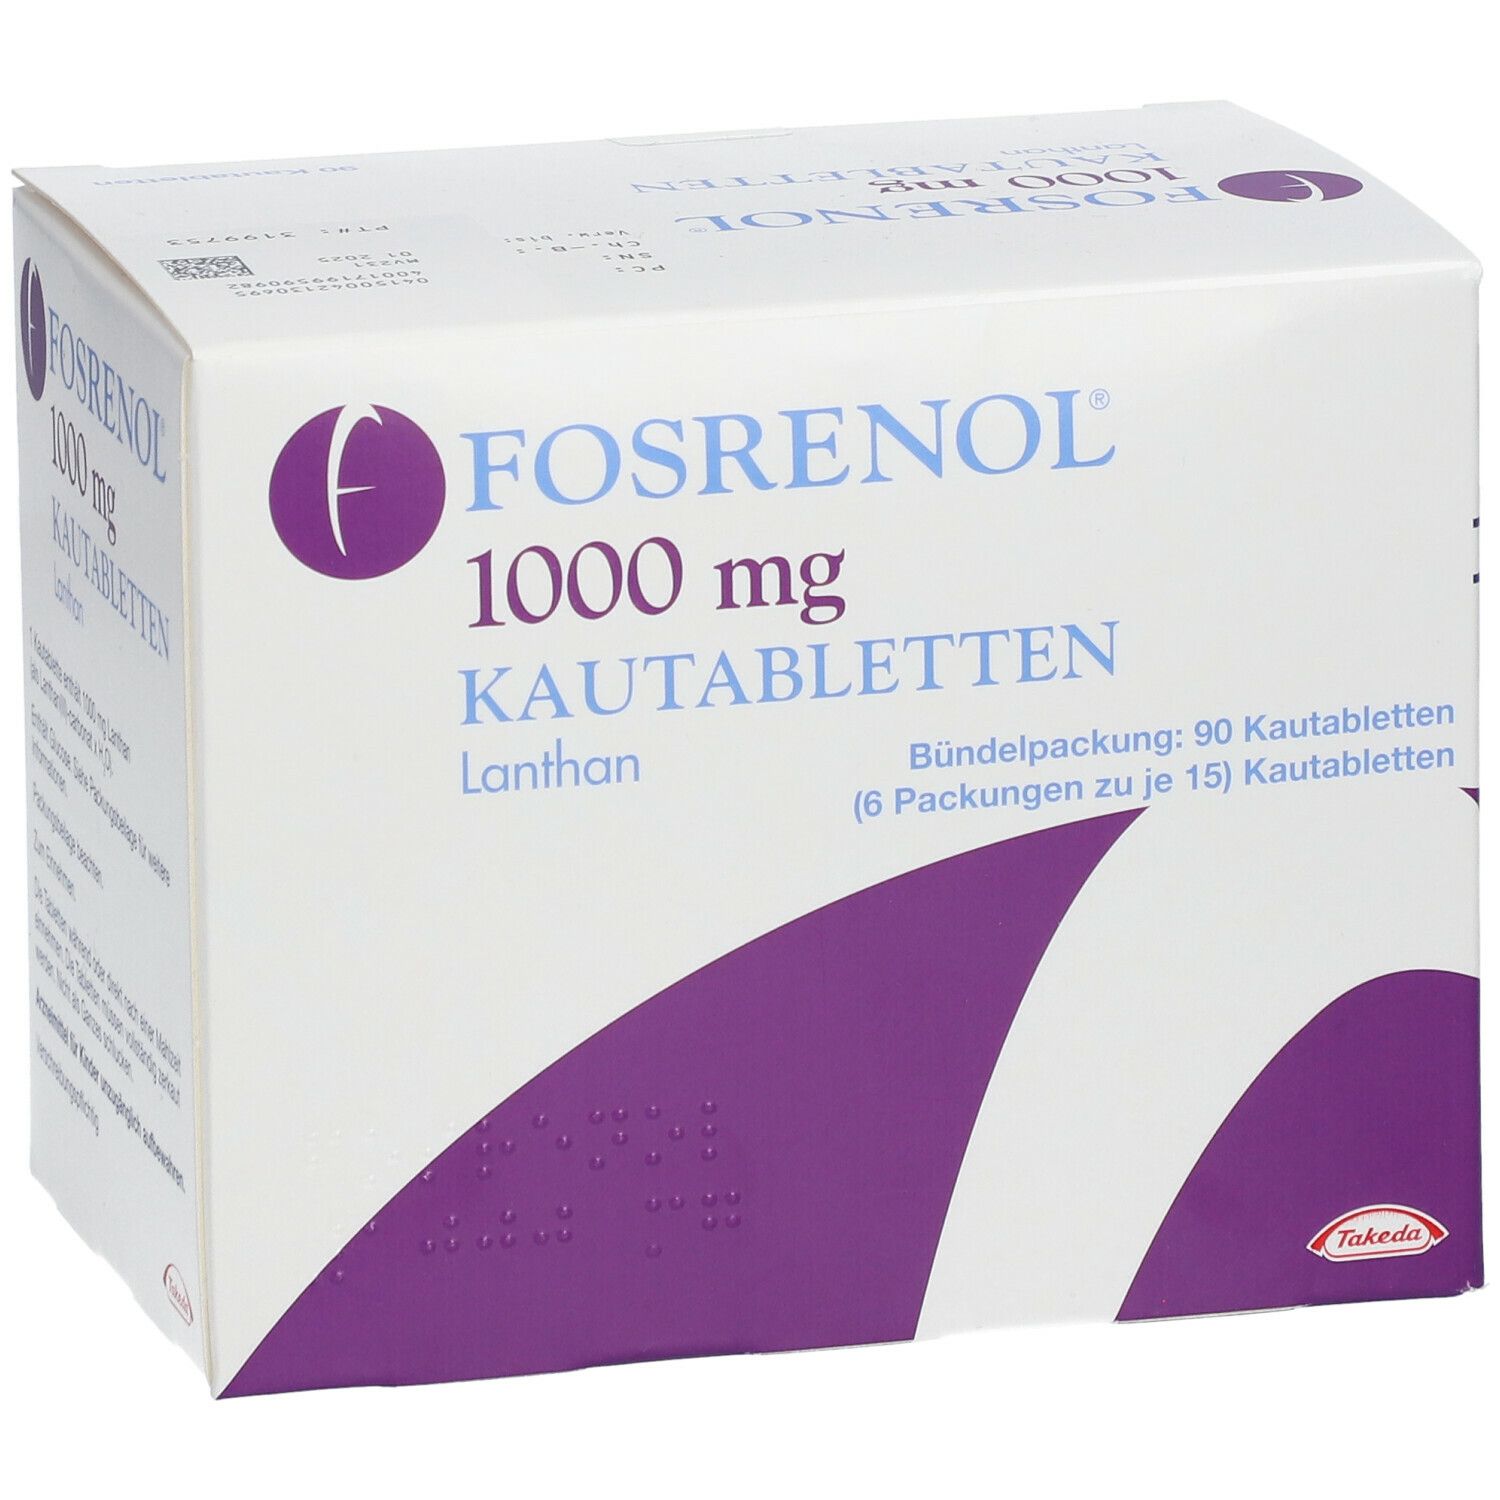 Fosrenol® 1000 mg